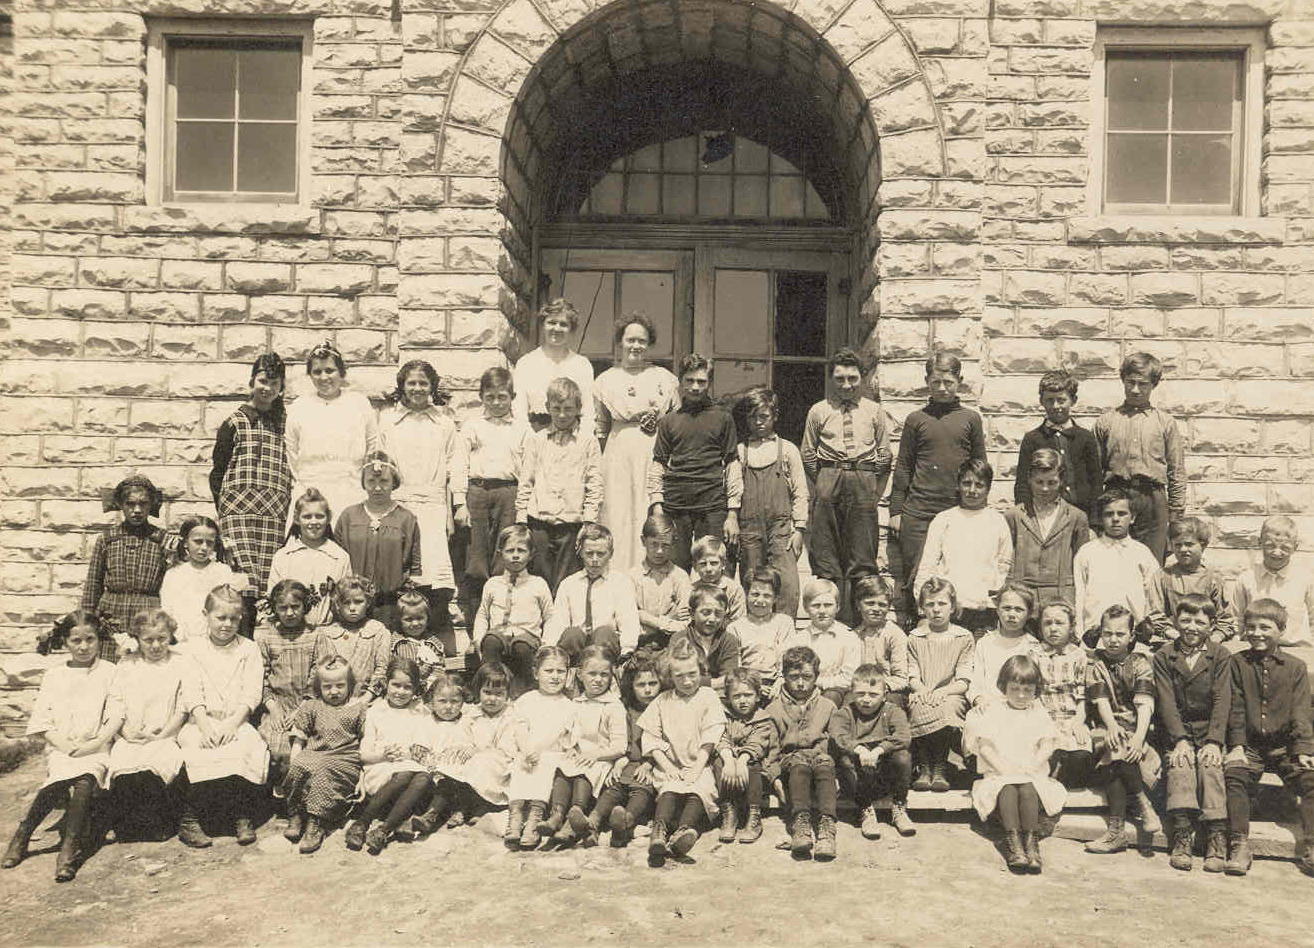 Children in front of the Egg Harbor School, circa 1920.